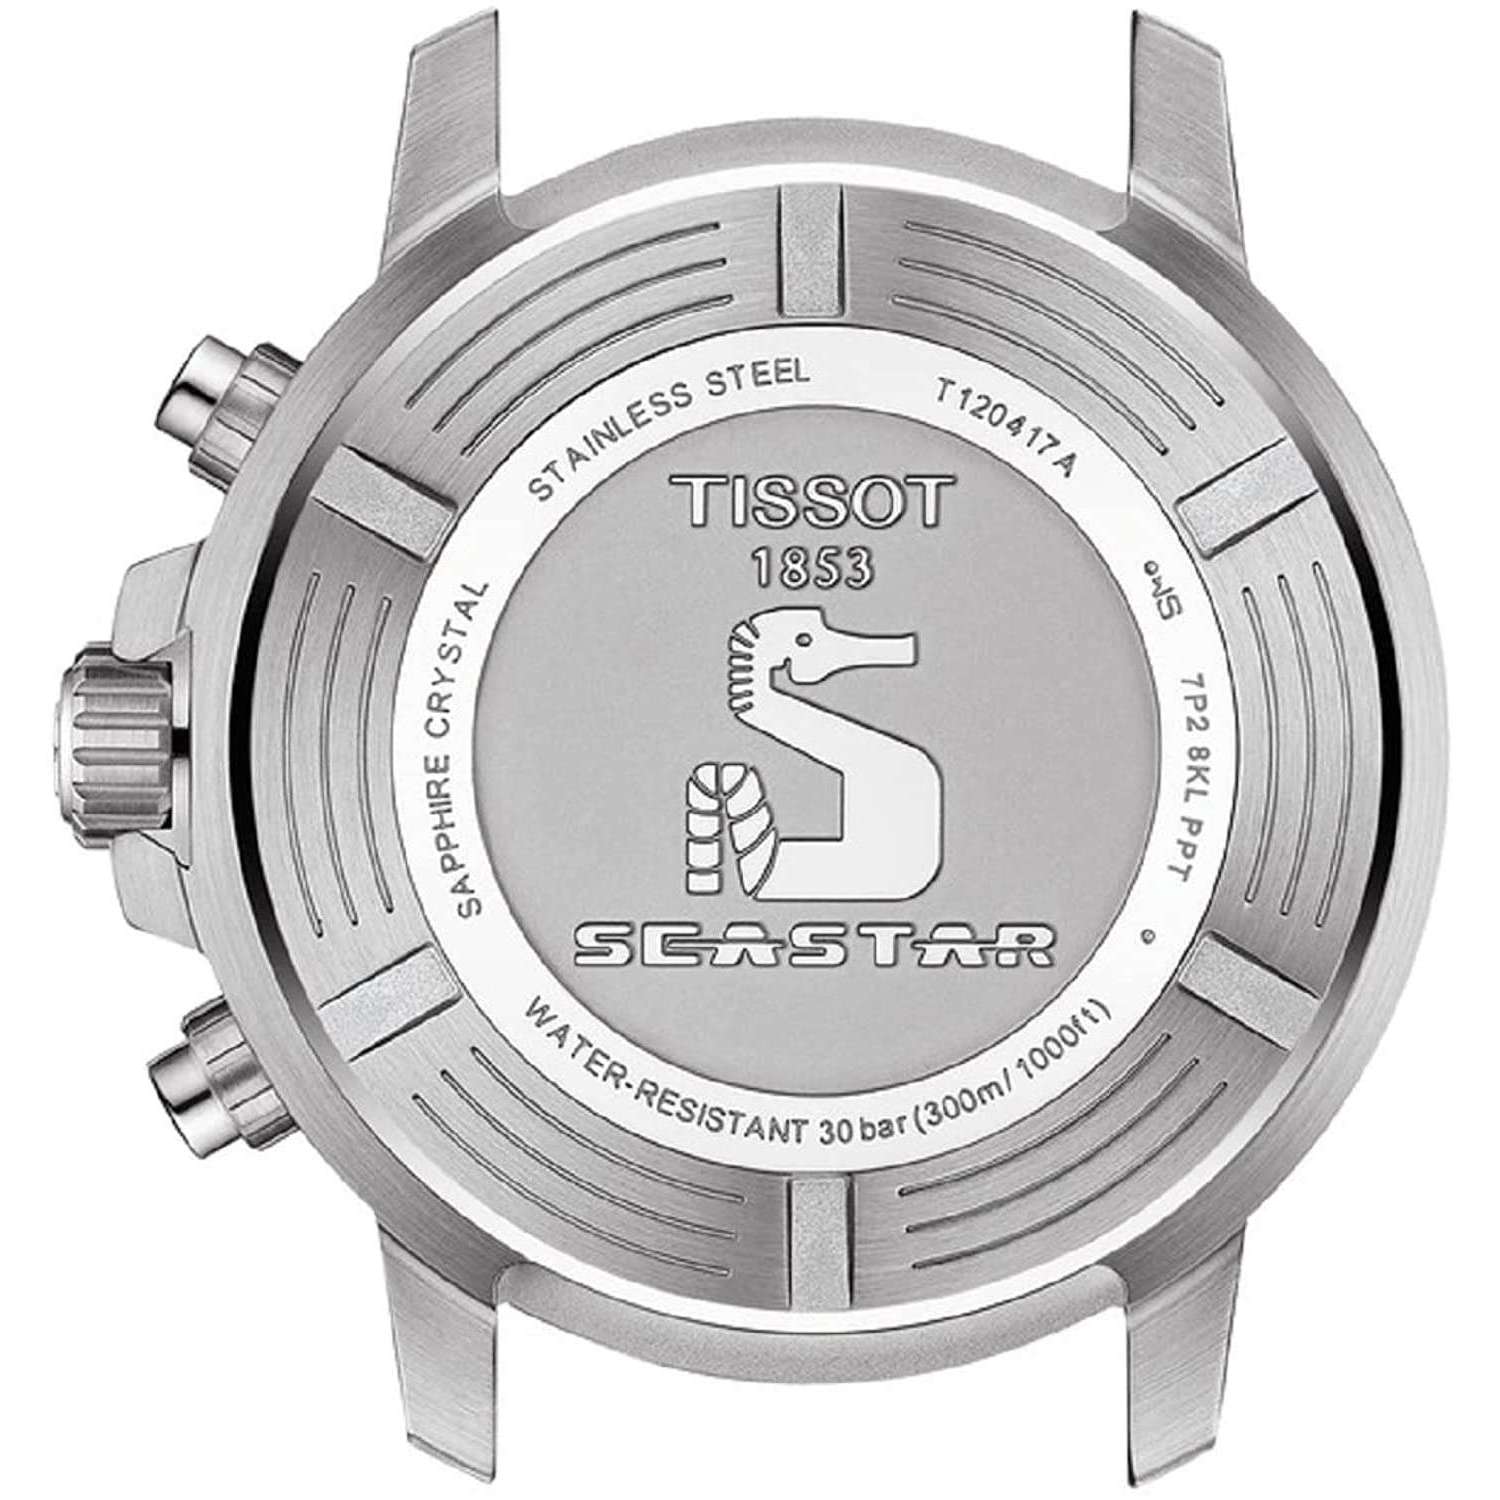 ROOK JAPAN:TISSOT SEASTAR CHRONOGRAPH 40 MM MEN WATCH T1204171704100,Luxury Watch,Tissot Seastar